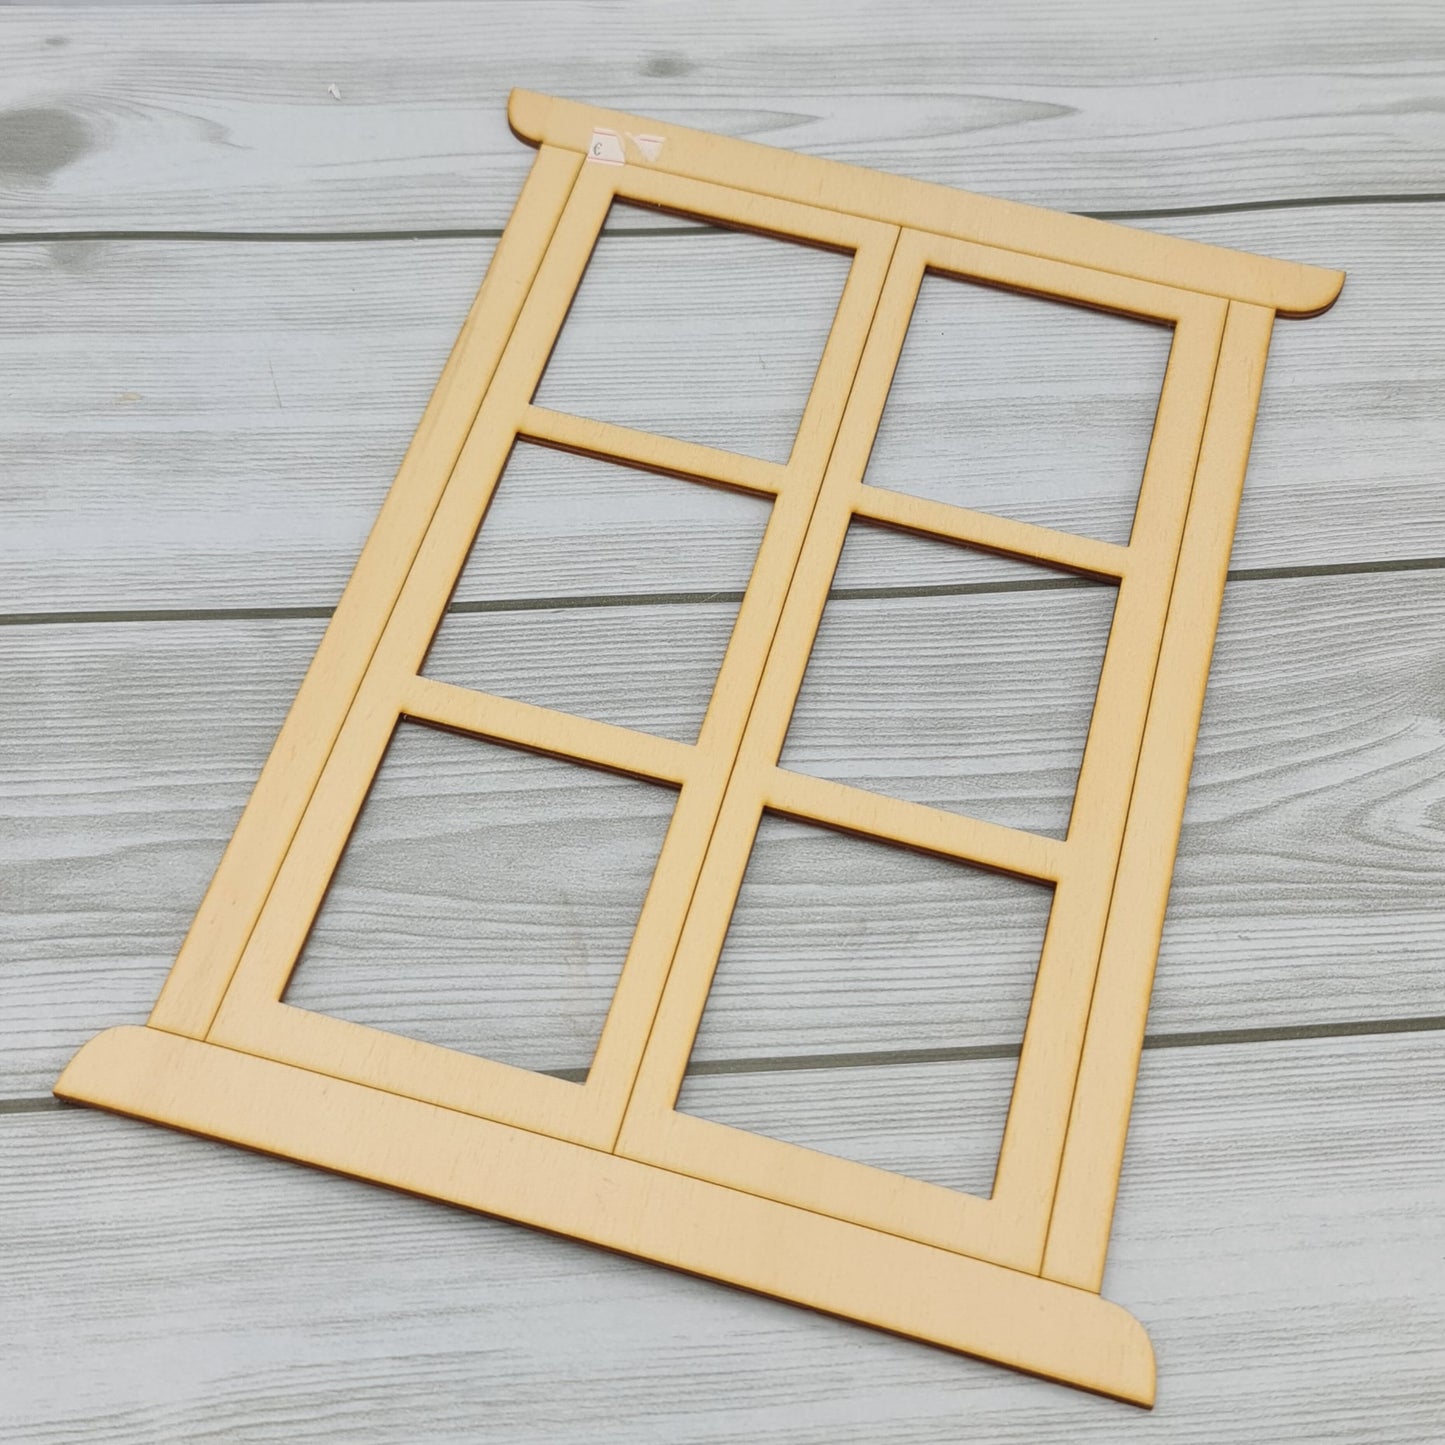 Large wooden window